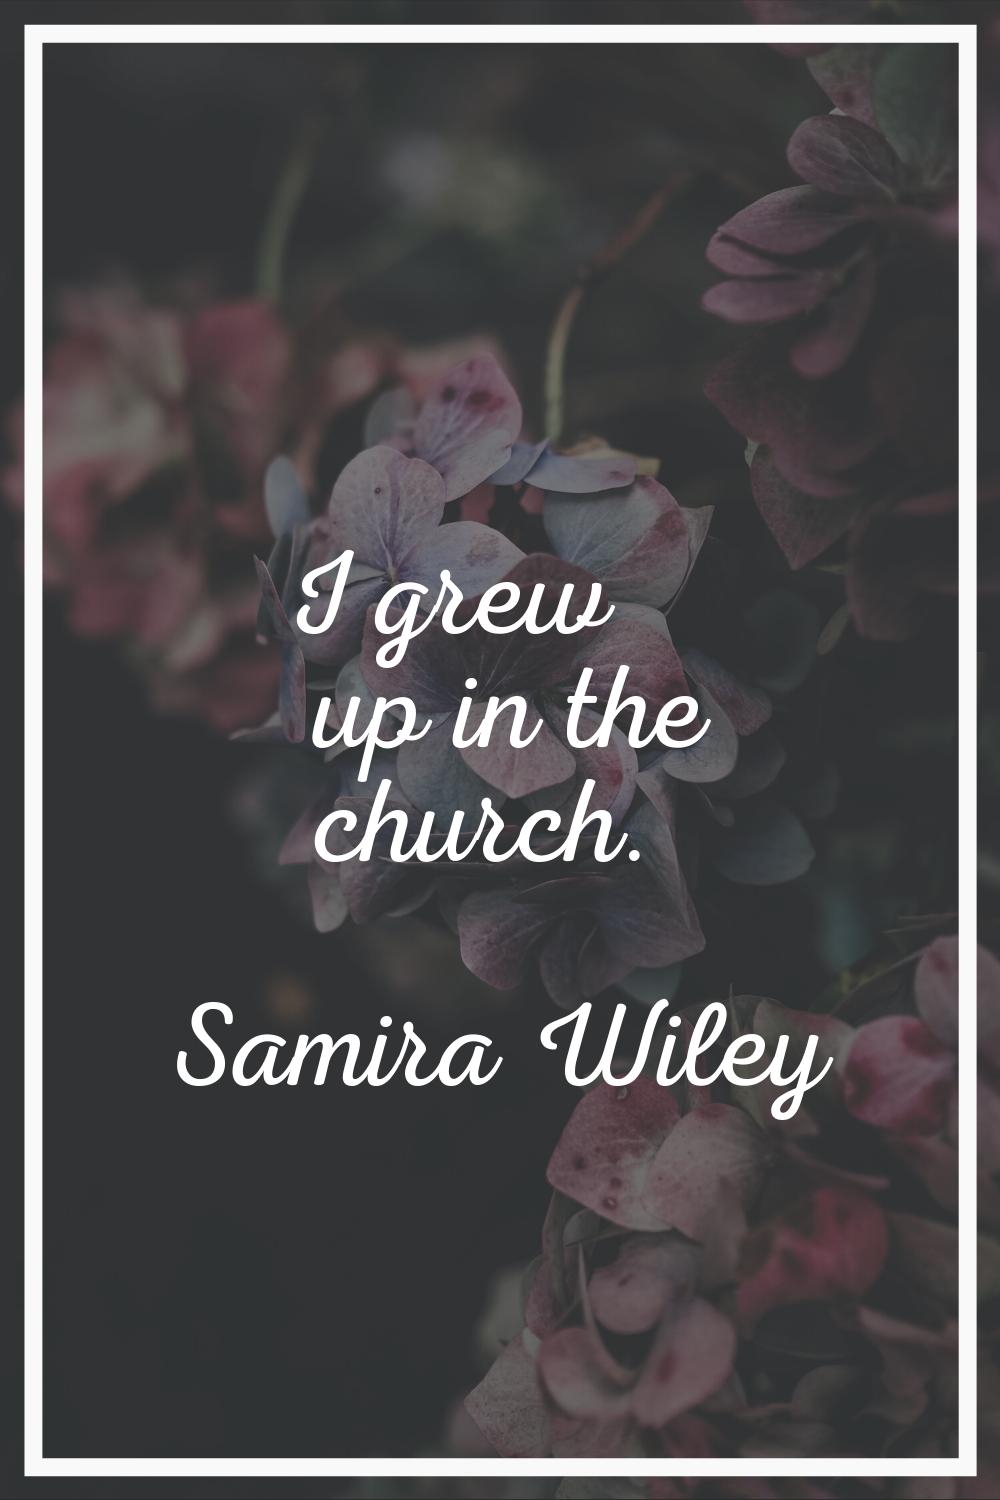 I grew up in the church.